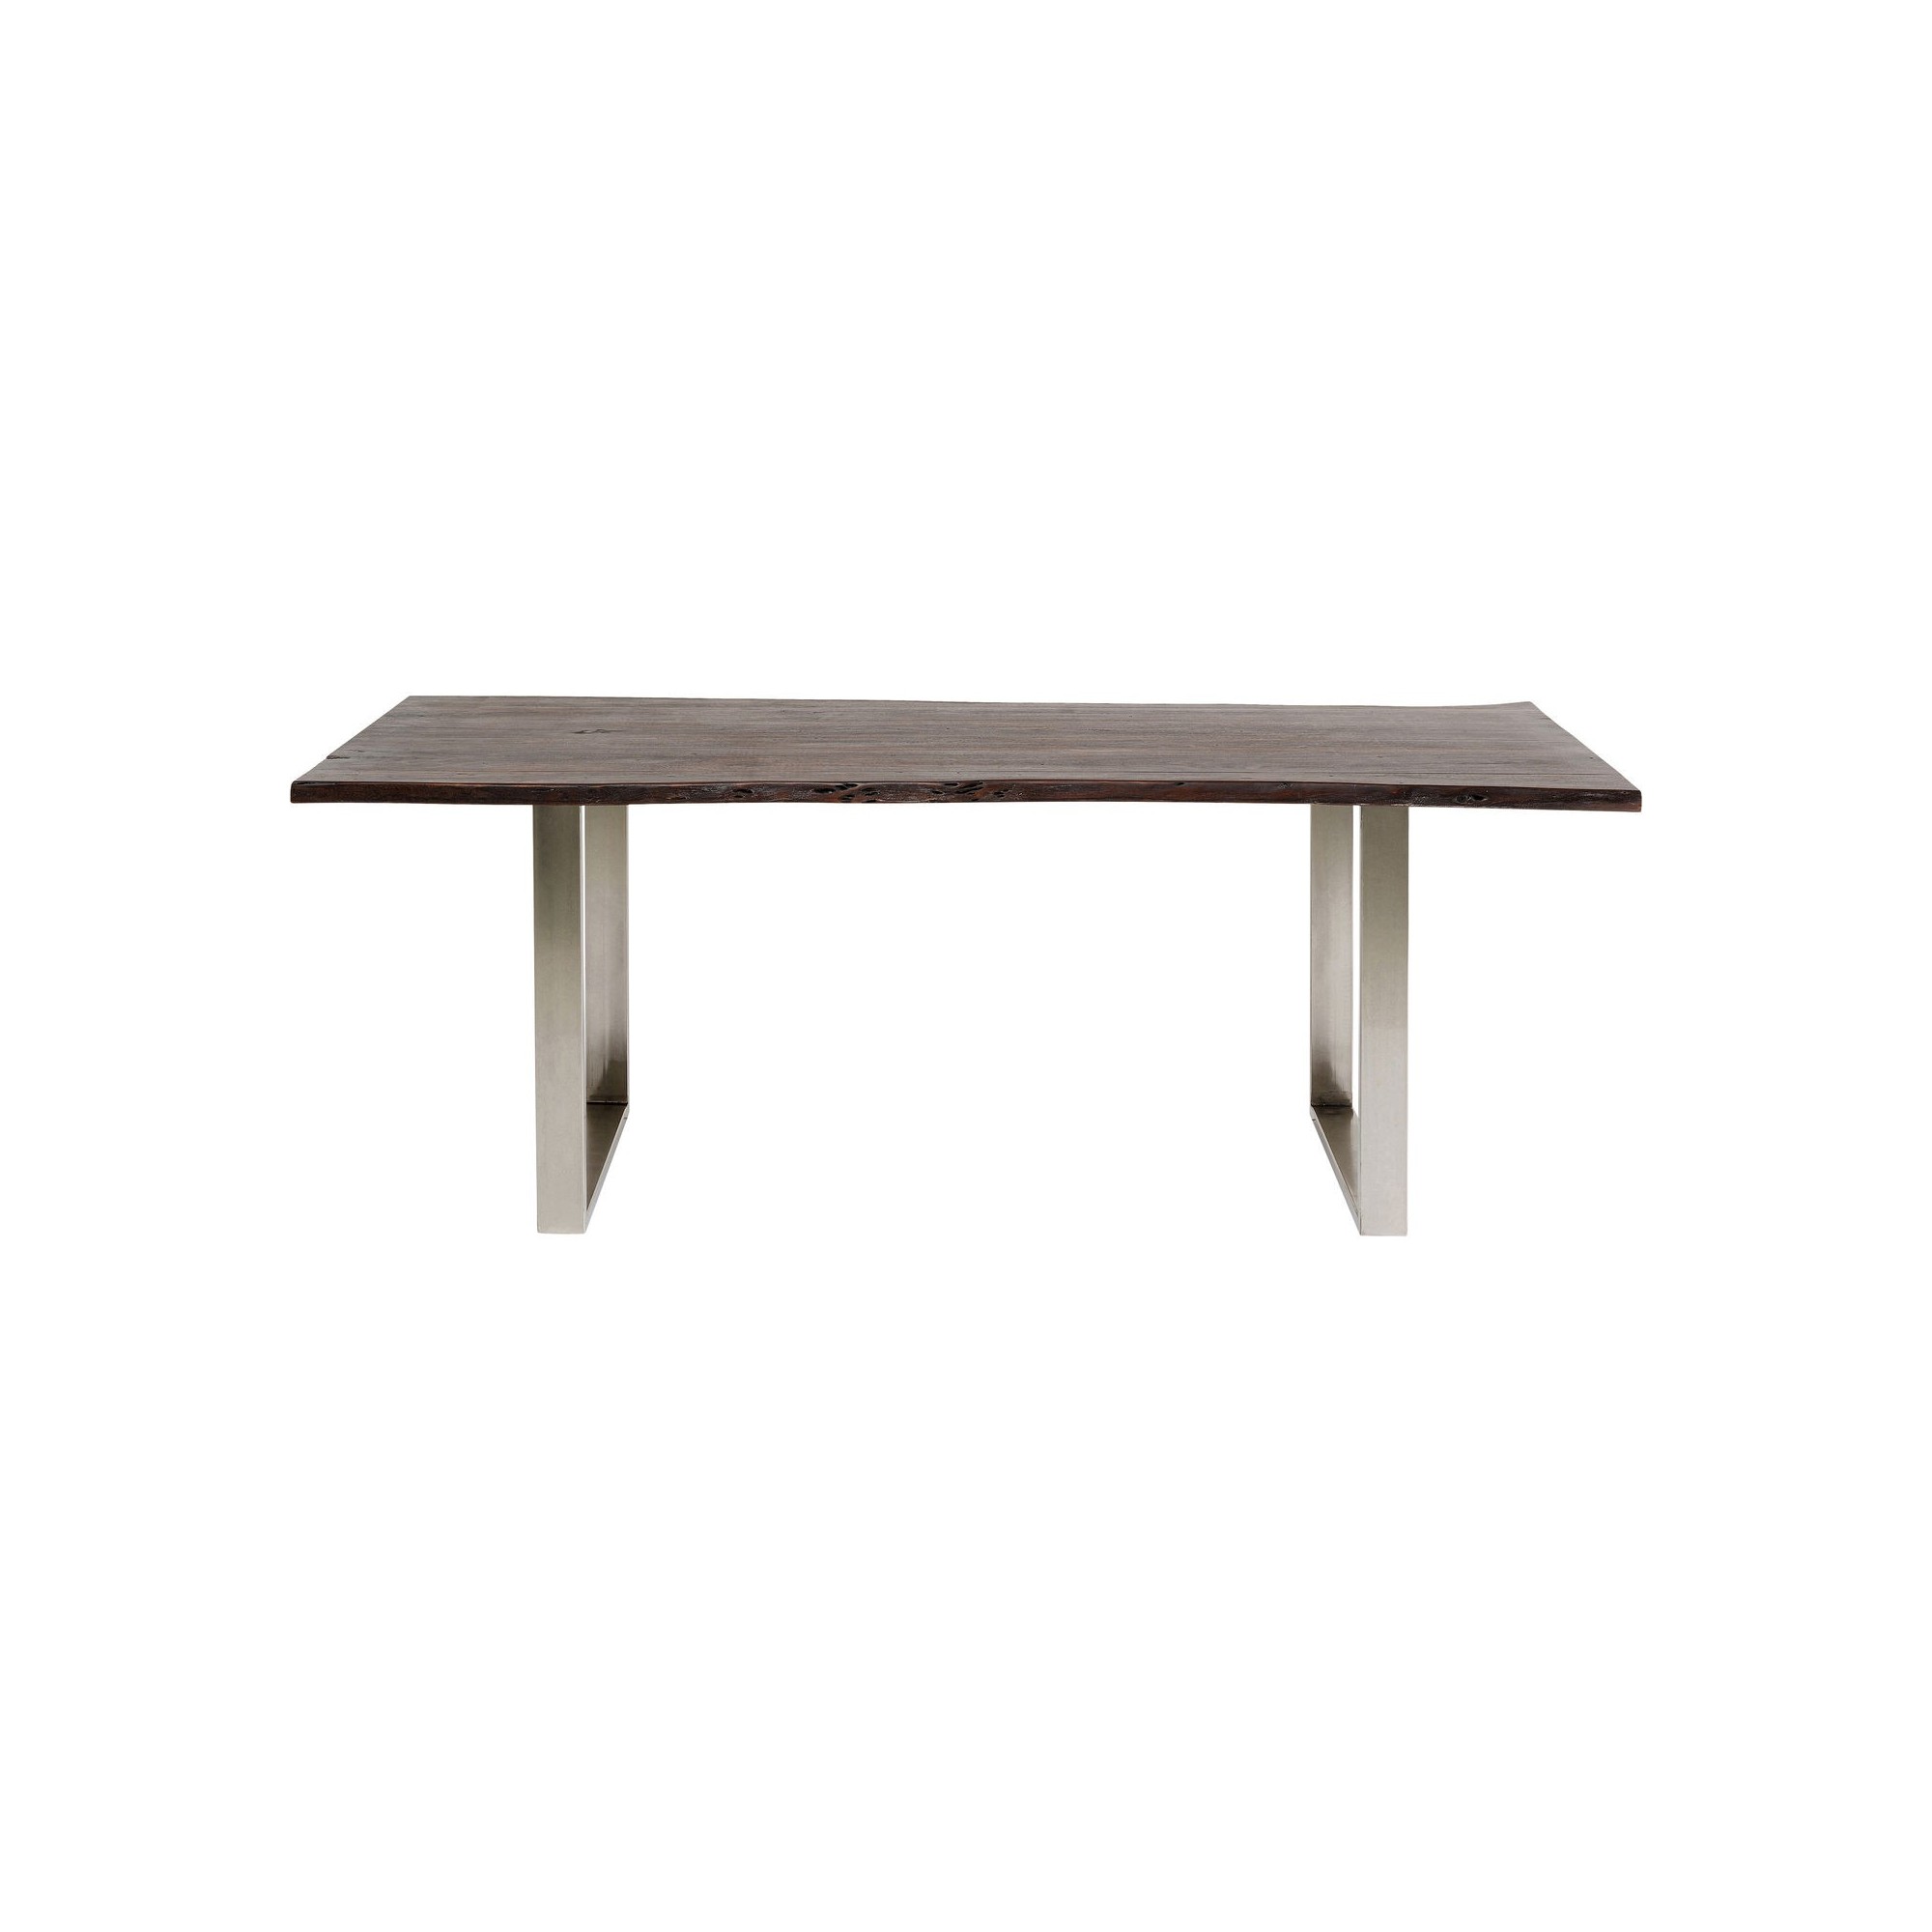 Table Harmony noyer chrome 180x90cm Kare Design